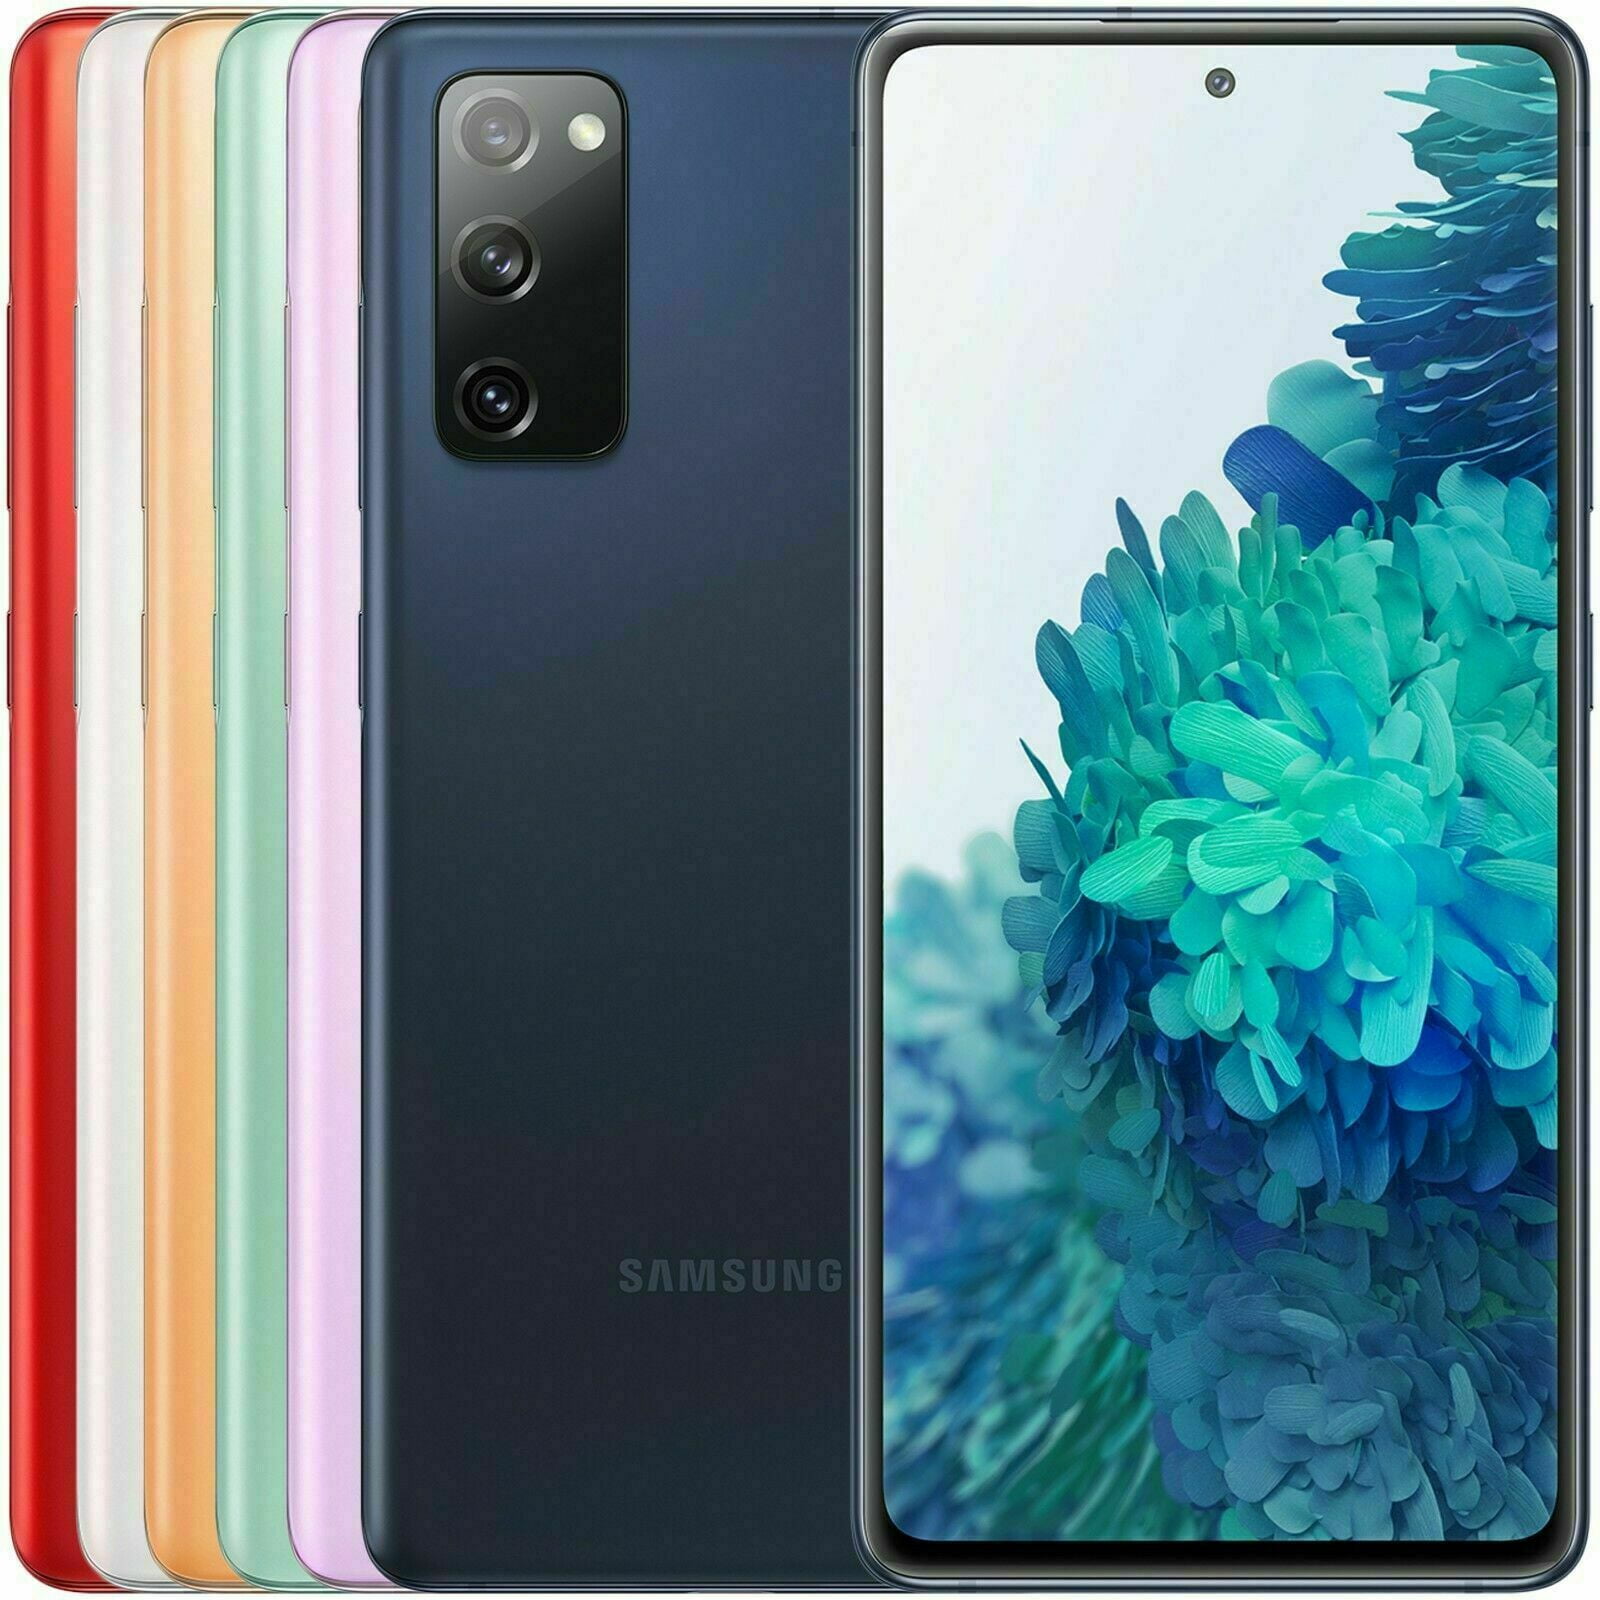 Open Box Samsung Galaxy S20 FE 5G SM-G781U 128GB Orange (US Model) - Factory Unlocked Cell Phone